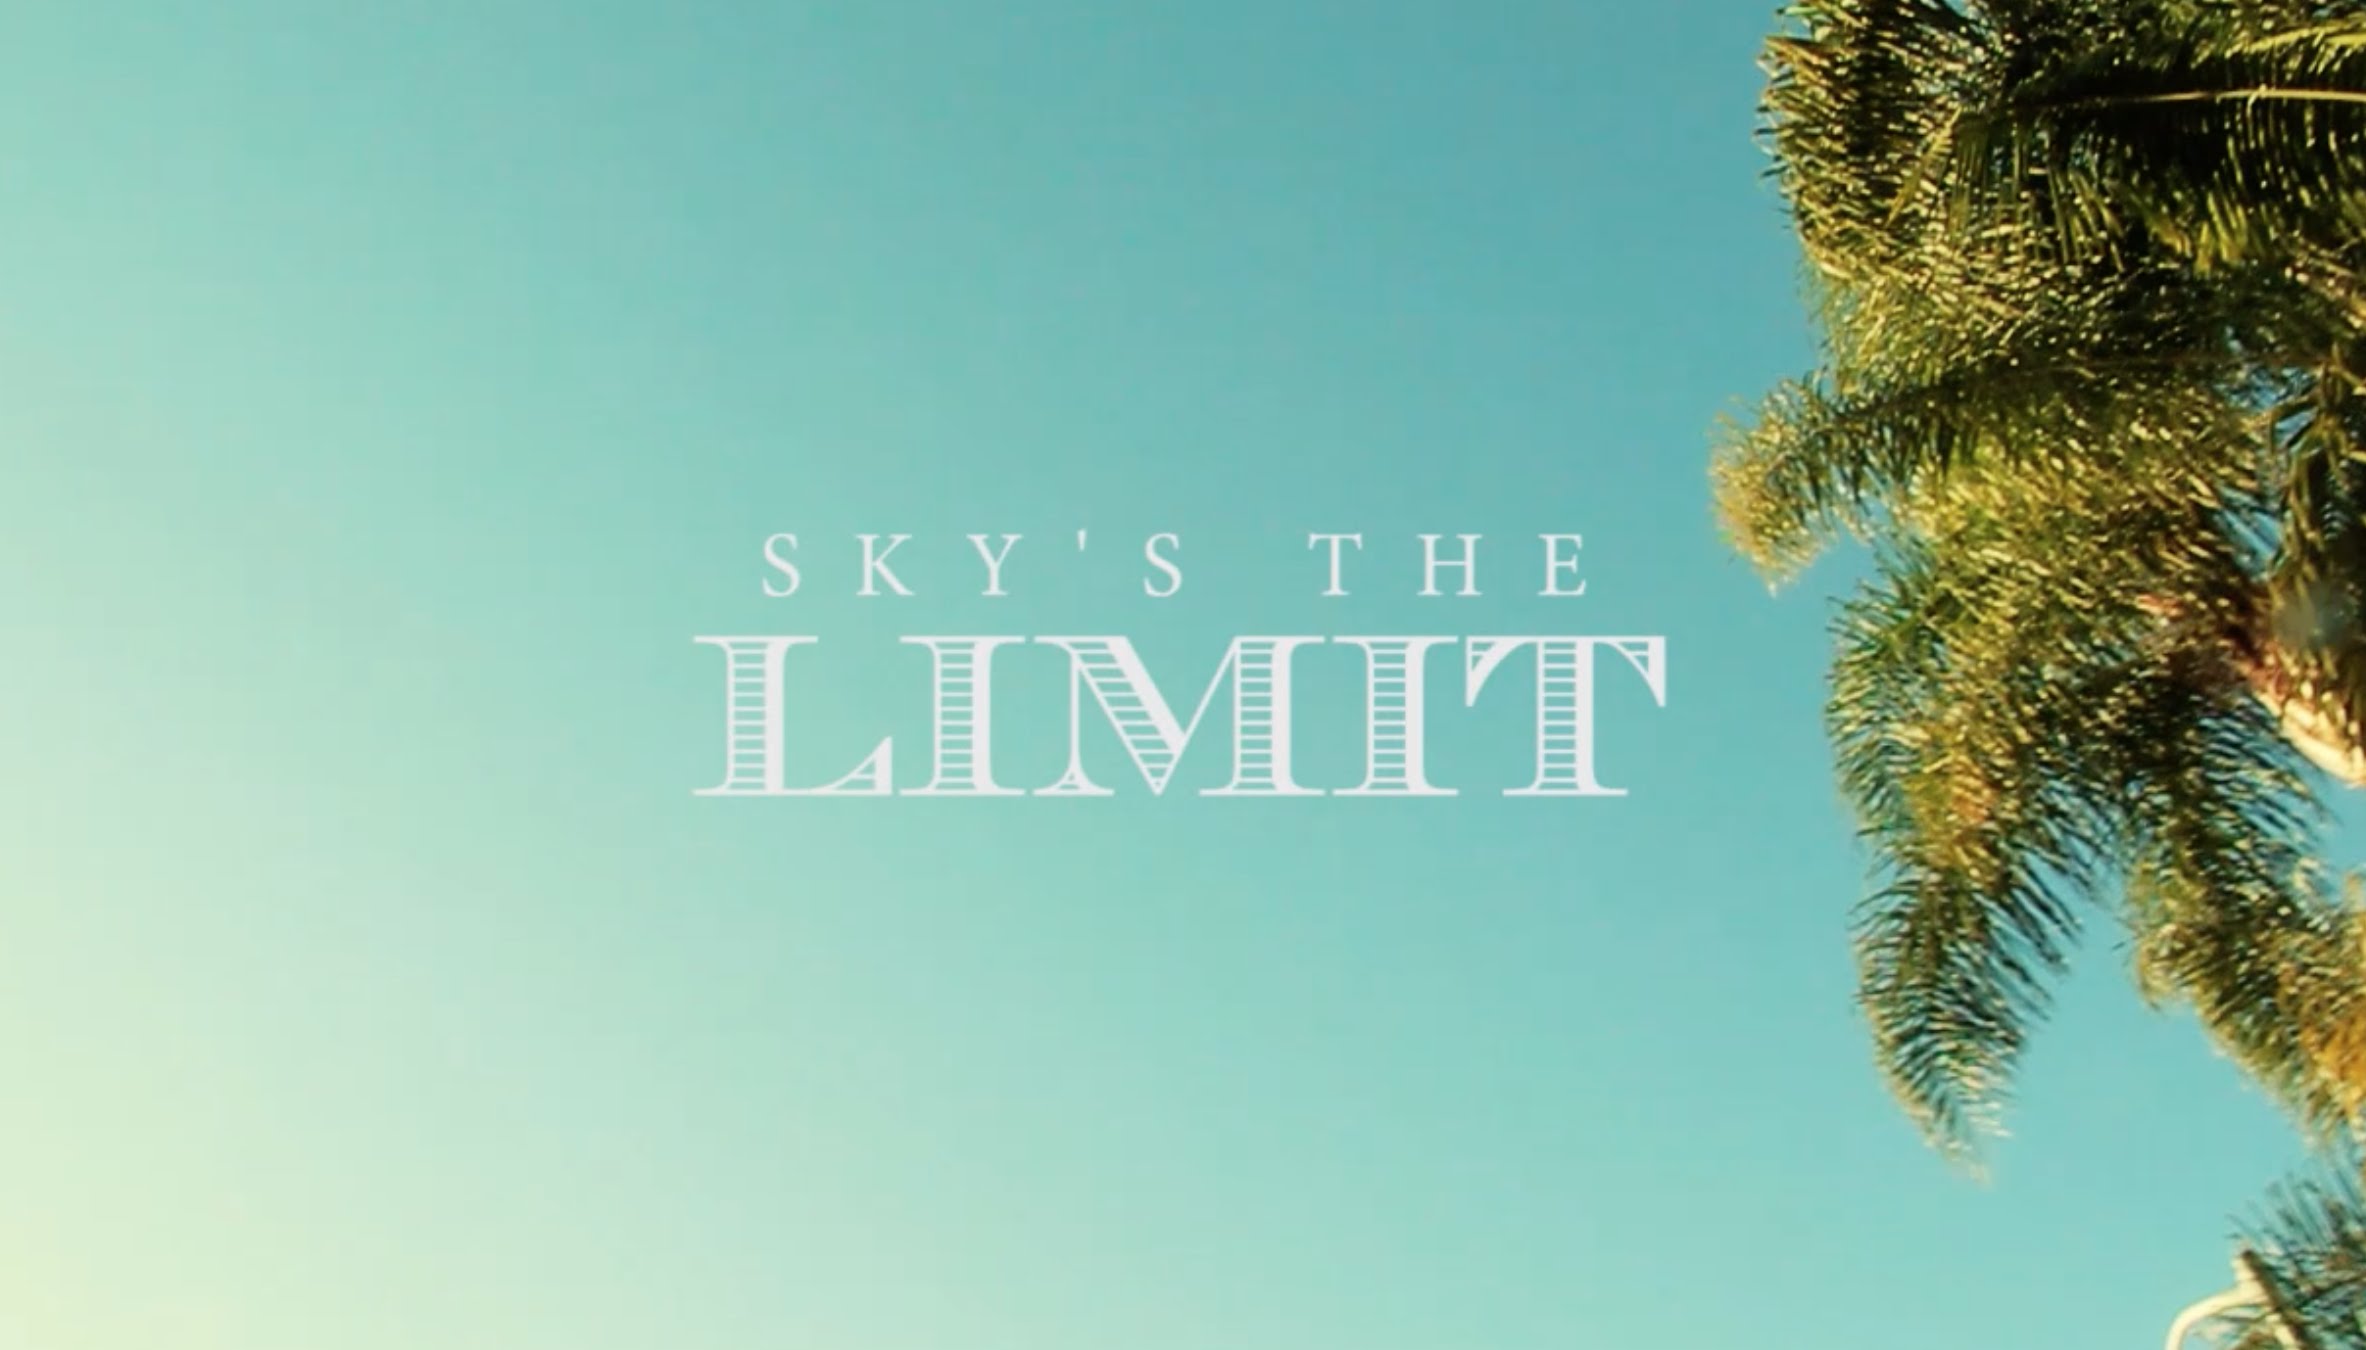 Sky's the limit photo